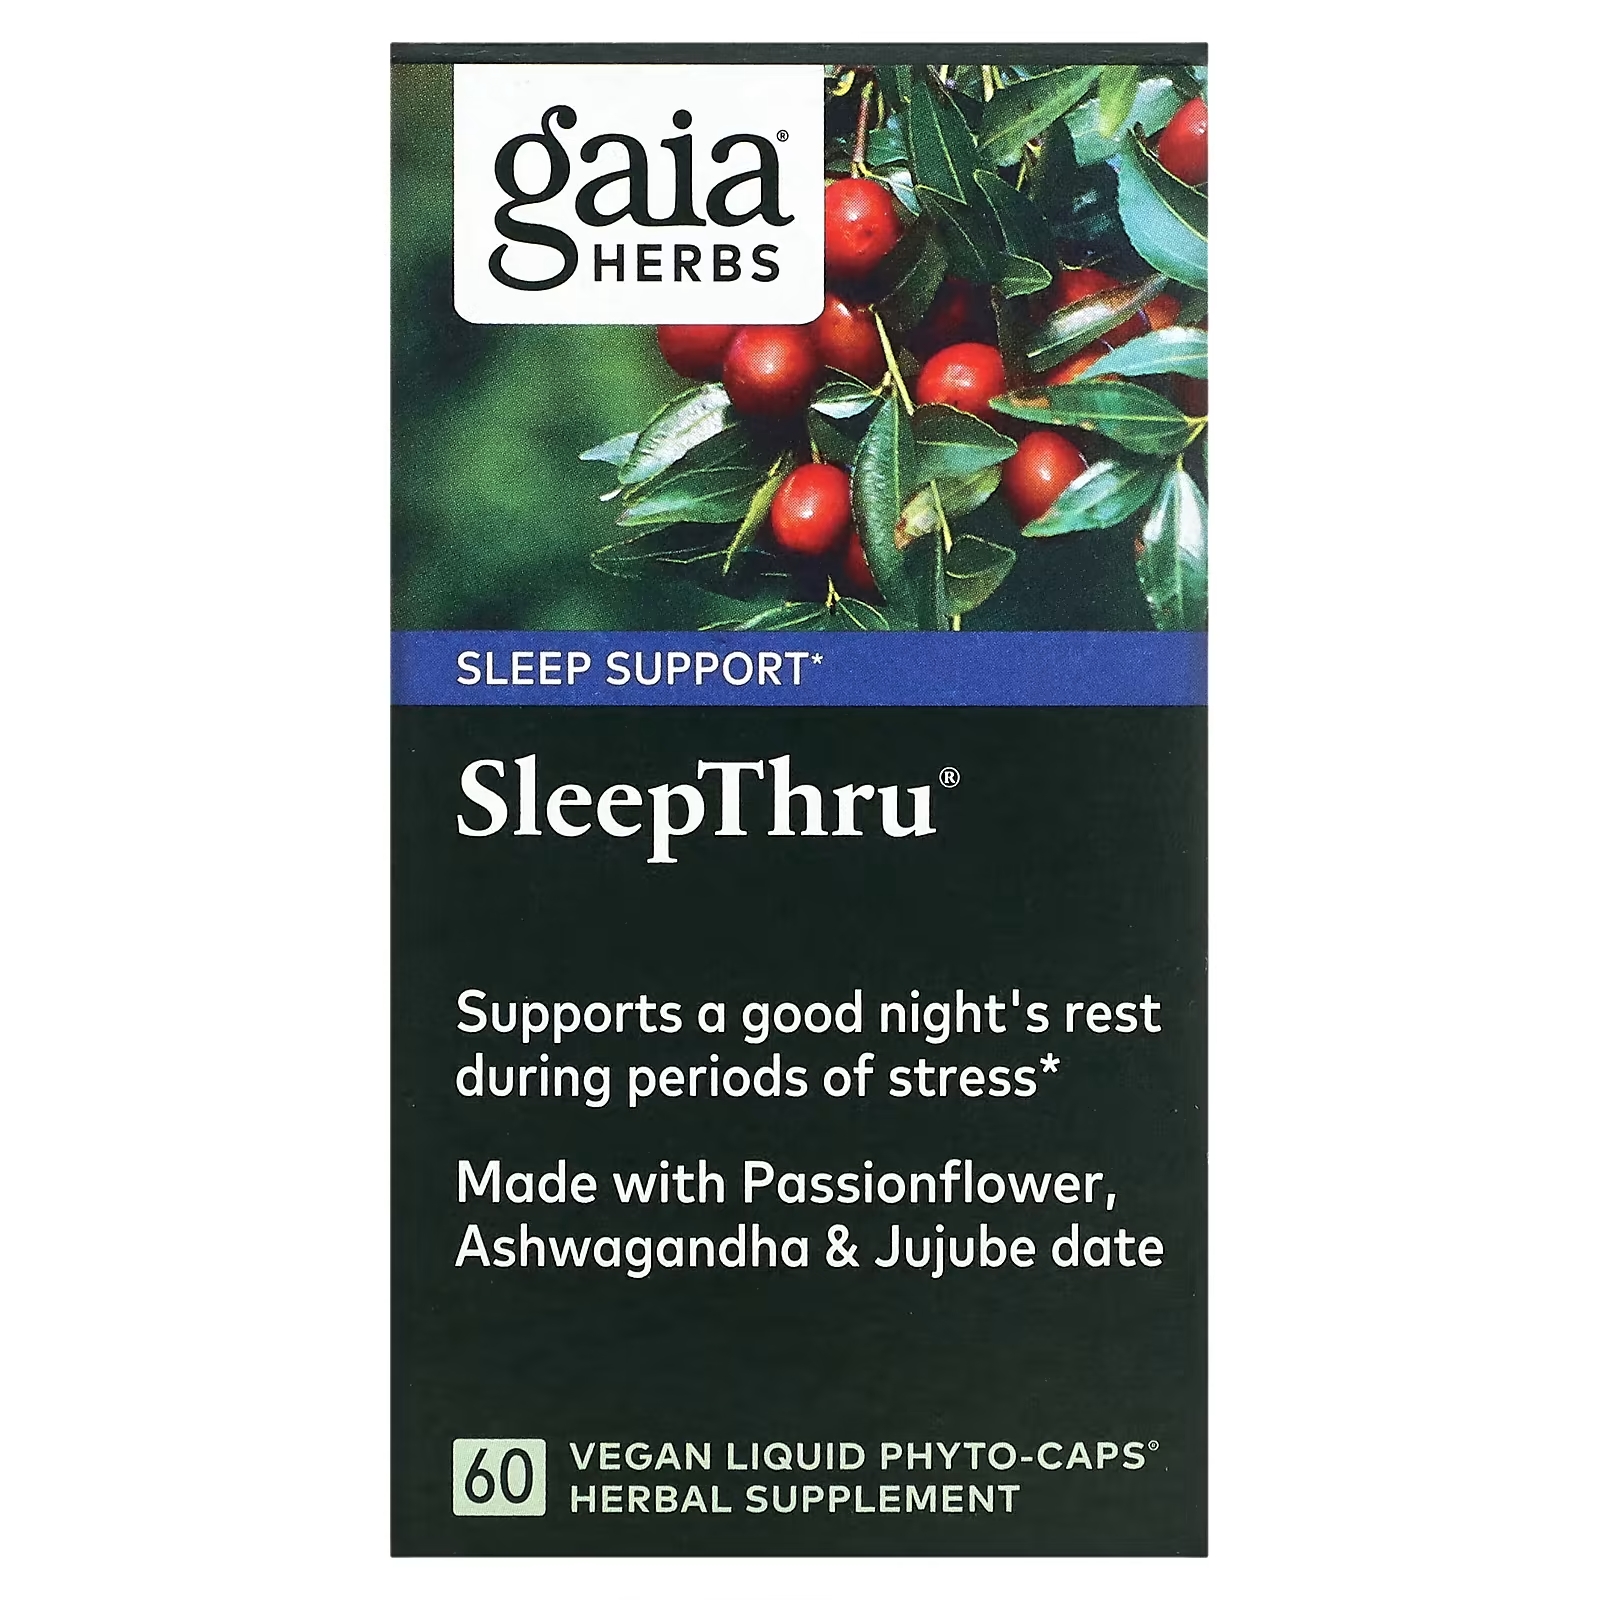 Травяная Добавка Gaia Herbs SleepThru, 60 капсул пищевая добавка gaia herbs sleepthru 120 веганских жидких фито капсул